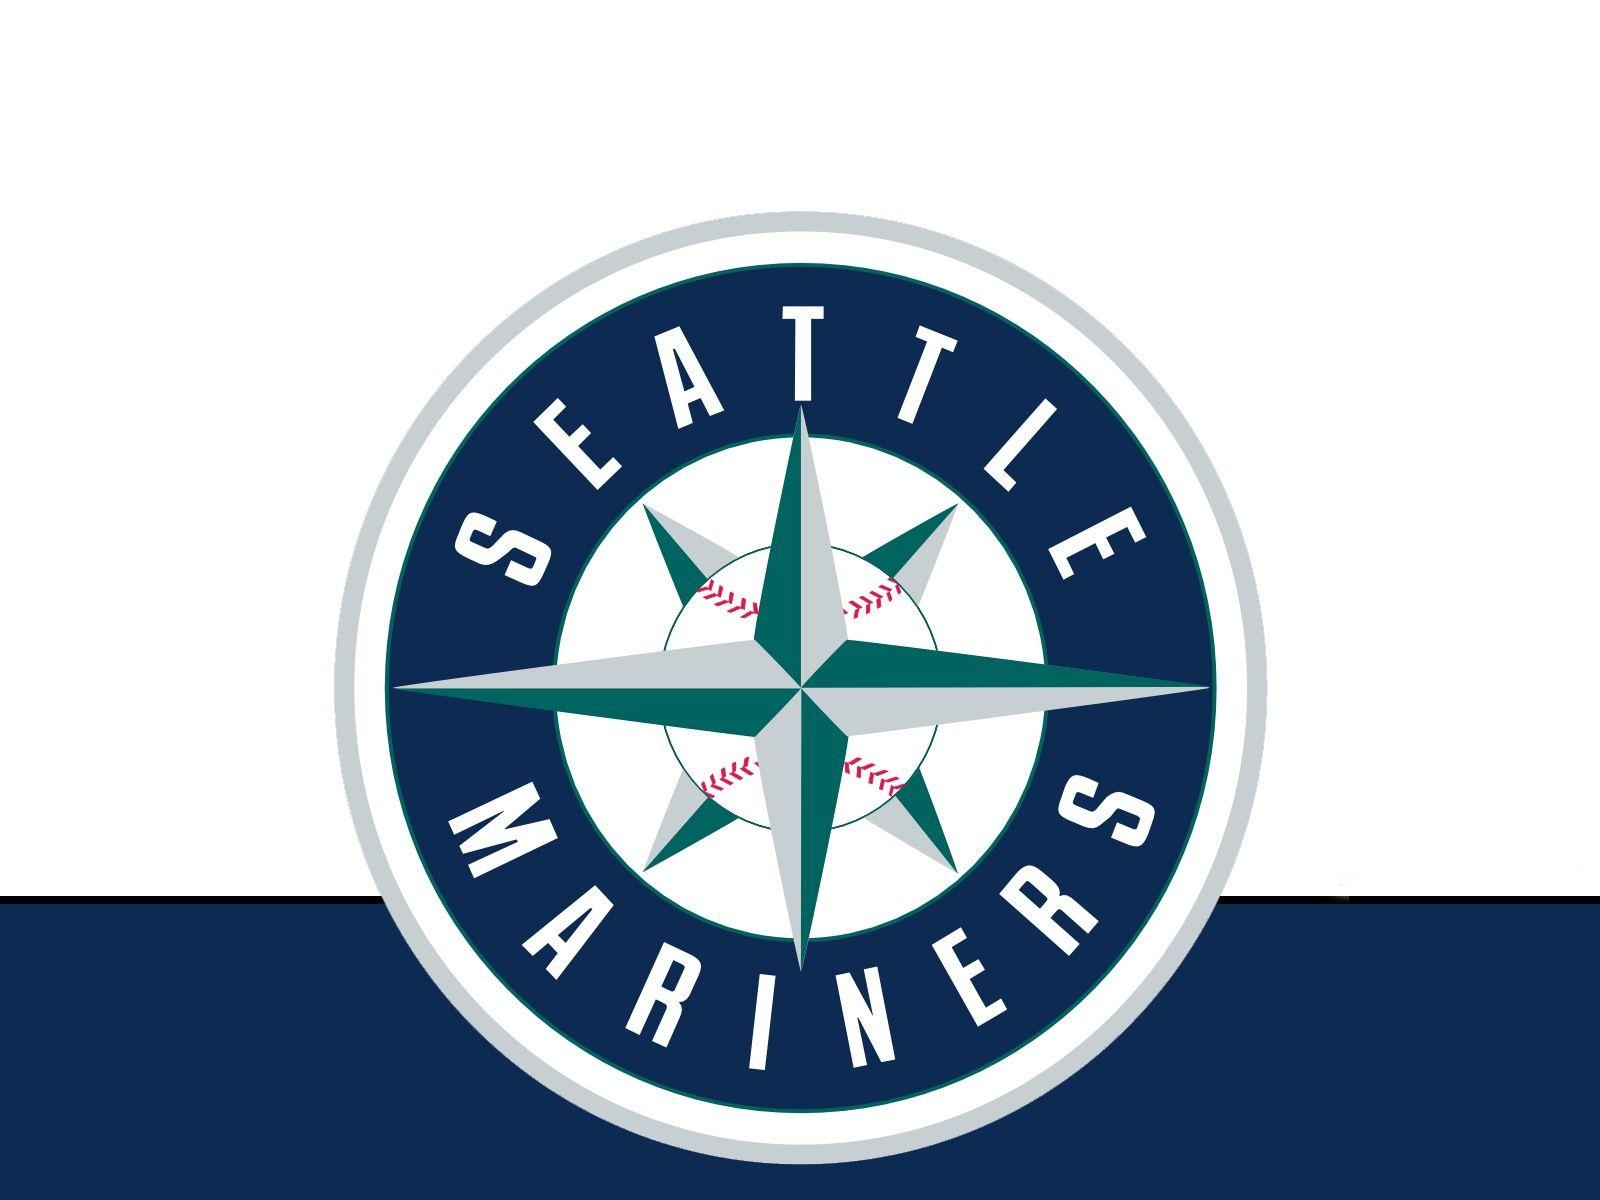 Seattle Mariners on X  NEW WALLPAPERS  httpstcoWkPFV83ezx  X